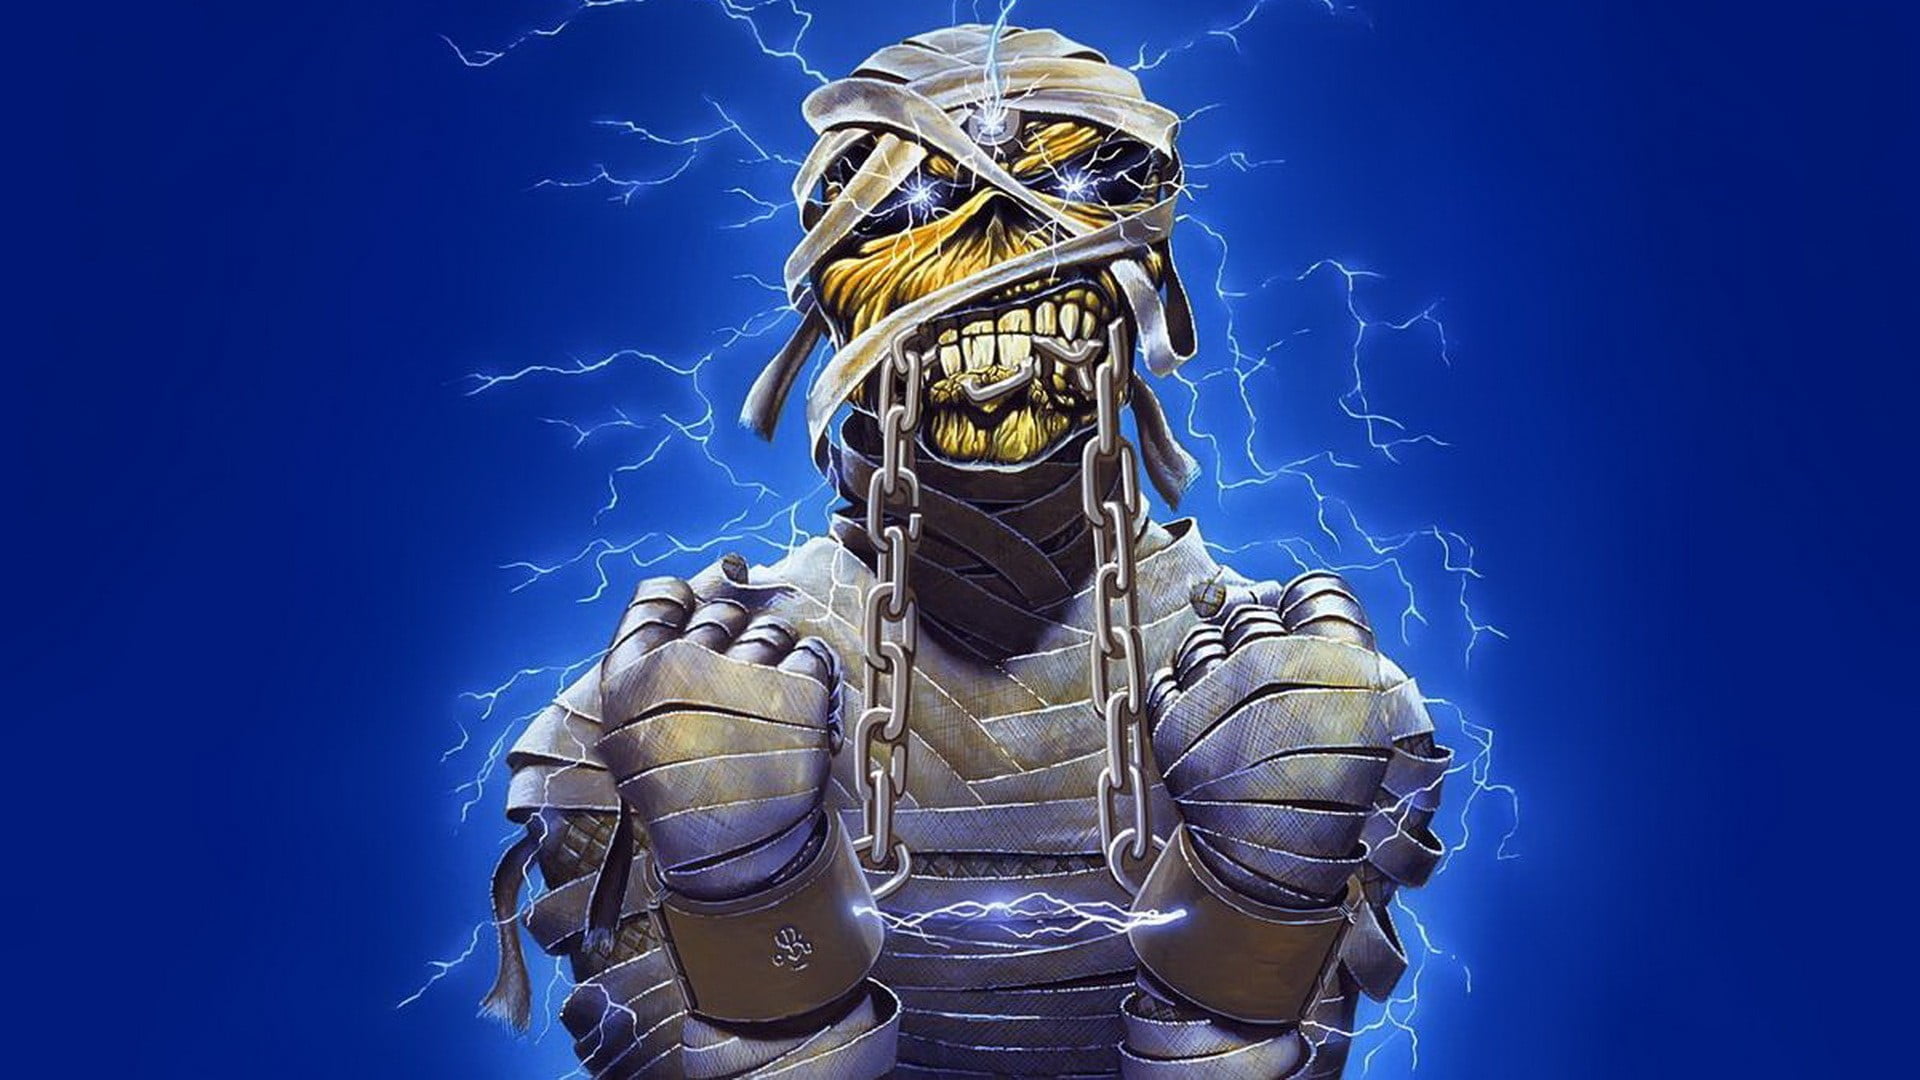 The Mummy illustration, Iron Maiden, Eddie, band mascot, blue